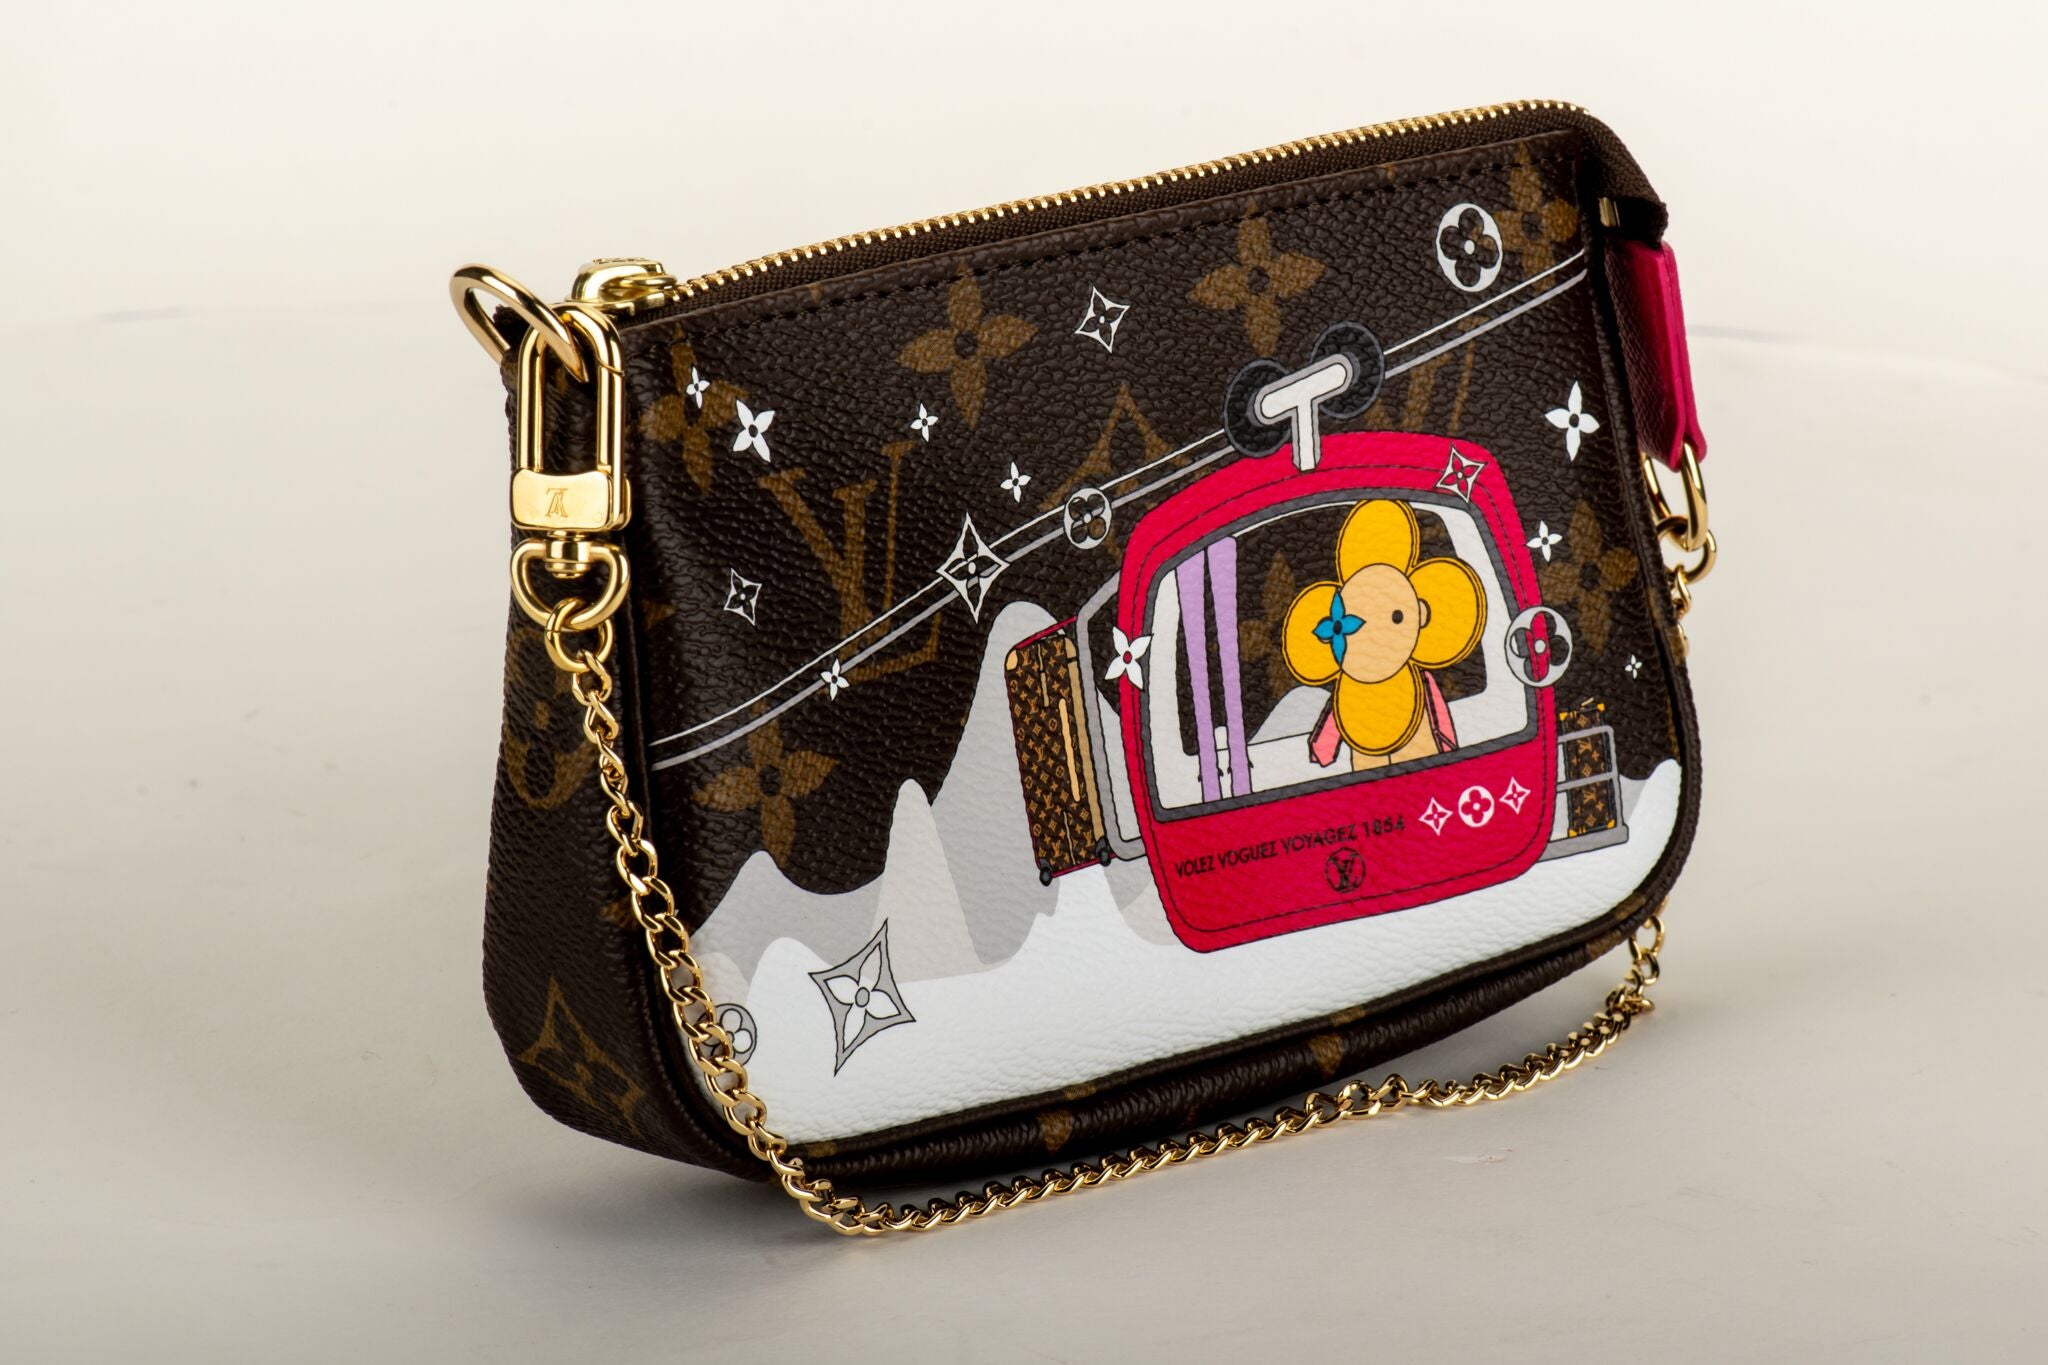 New in Box Louis Vuitton Christmas Limited Edition Megeve Pouchette Bag